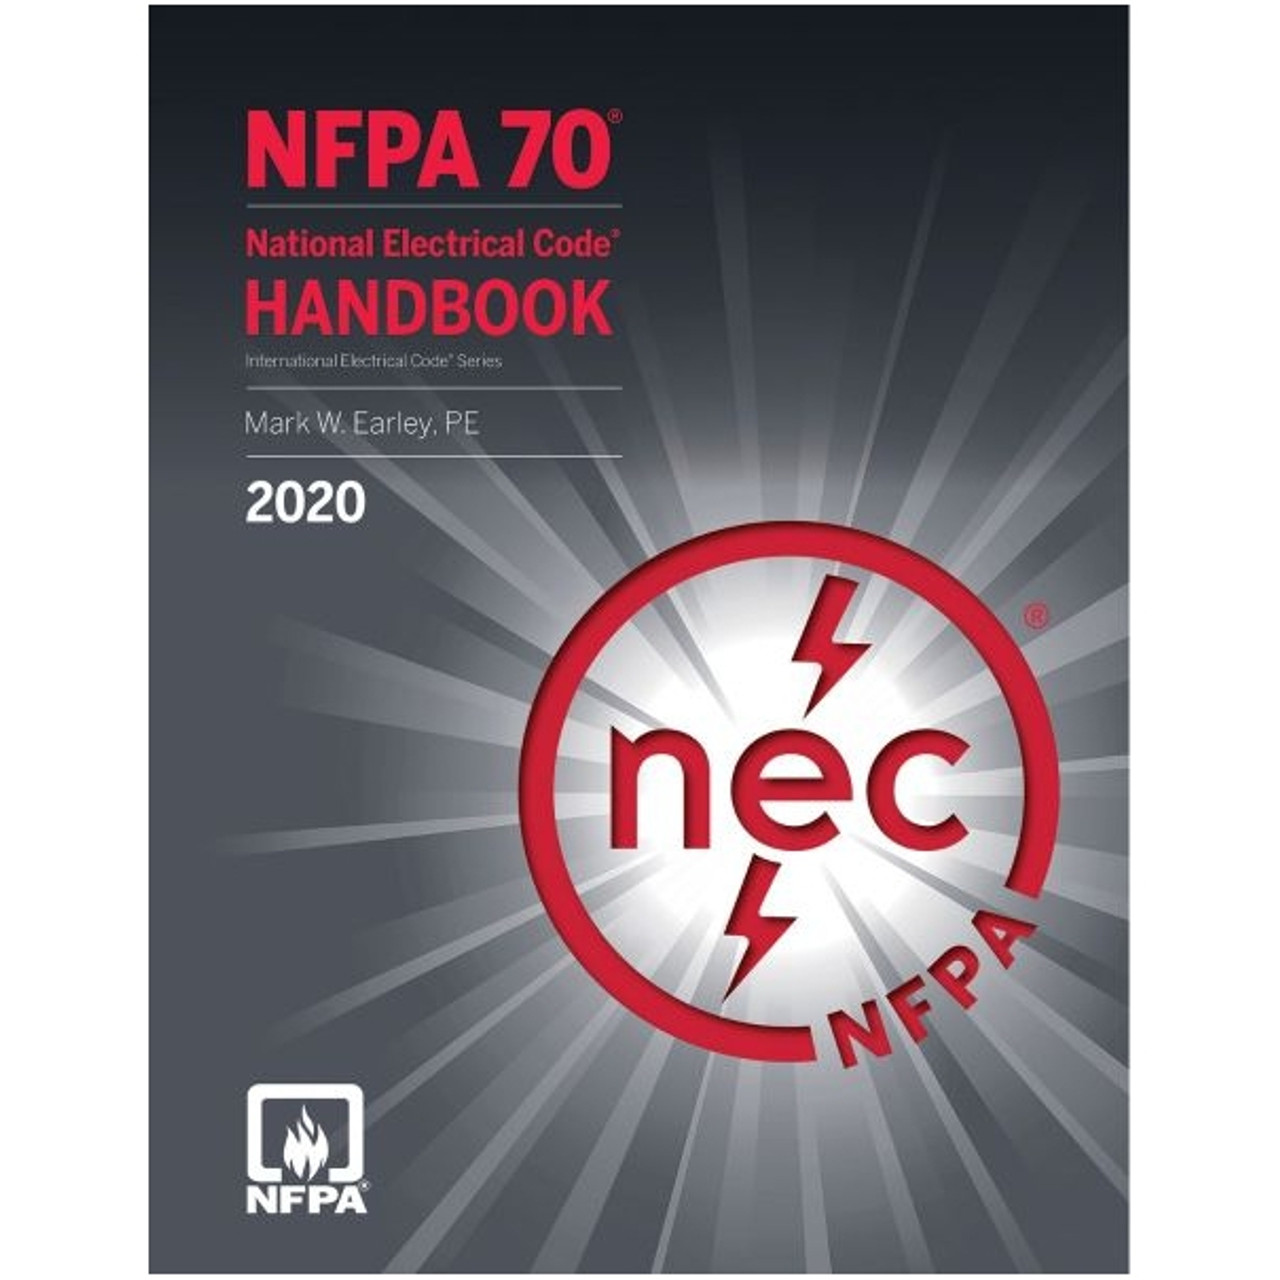 National Electrical Code Handbook 2020 - 9781455922901 ...